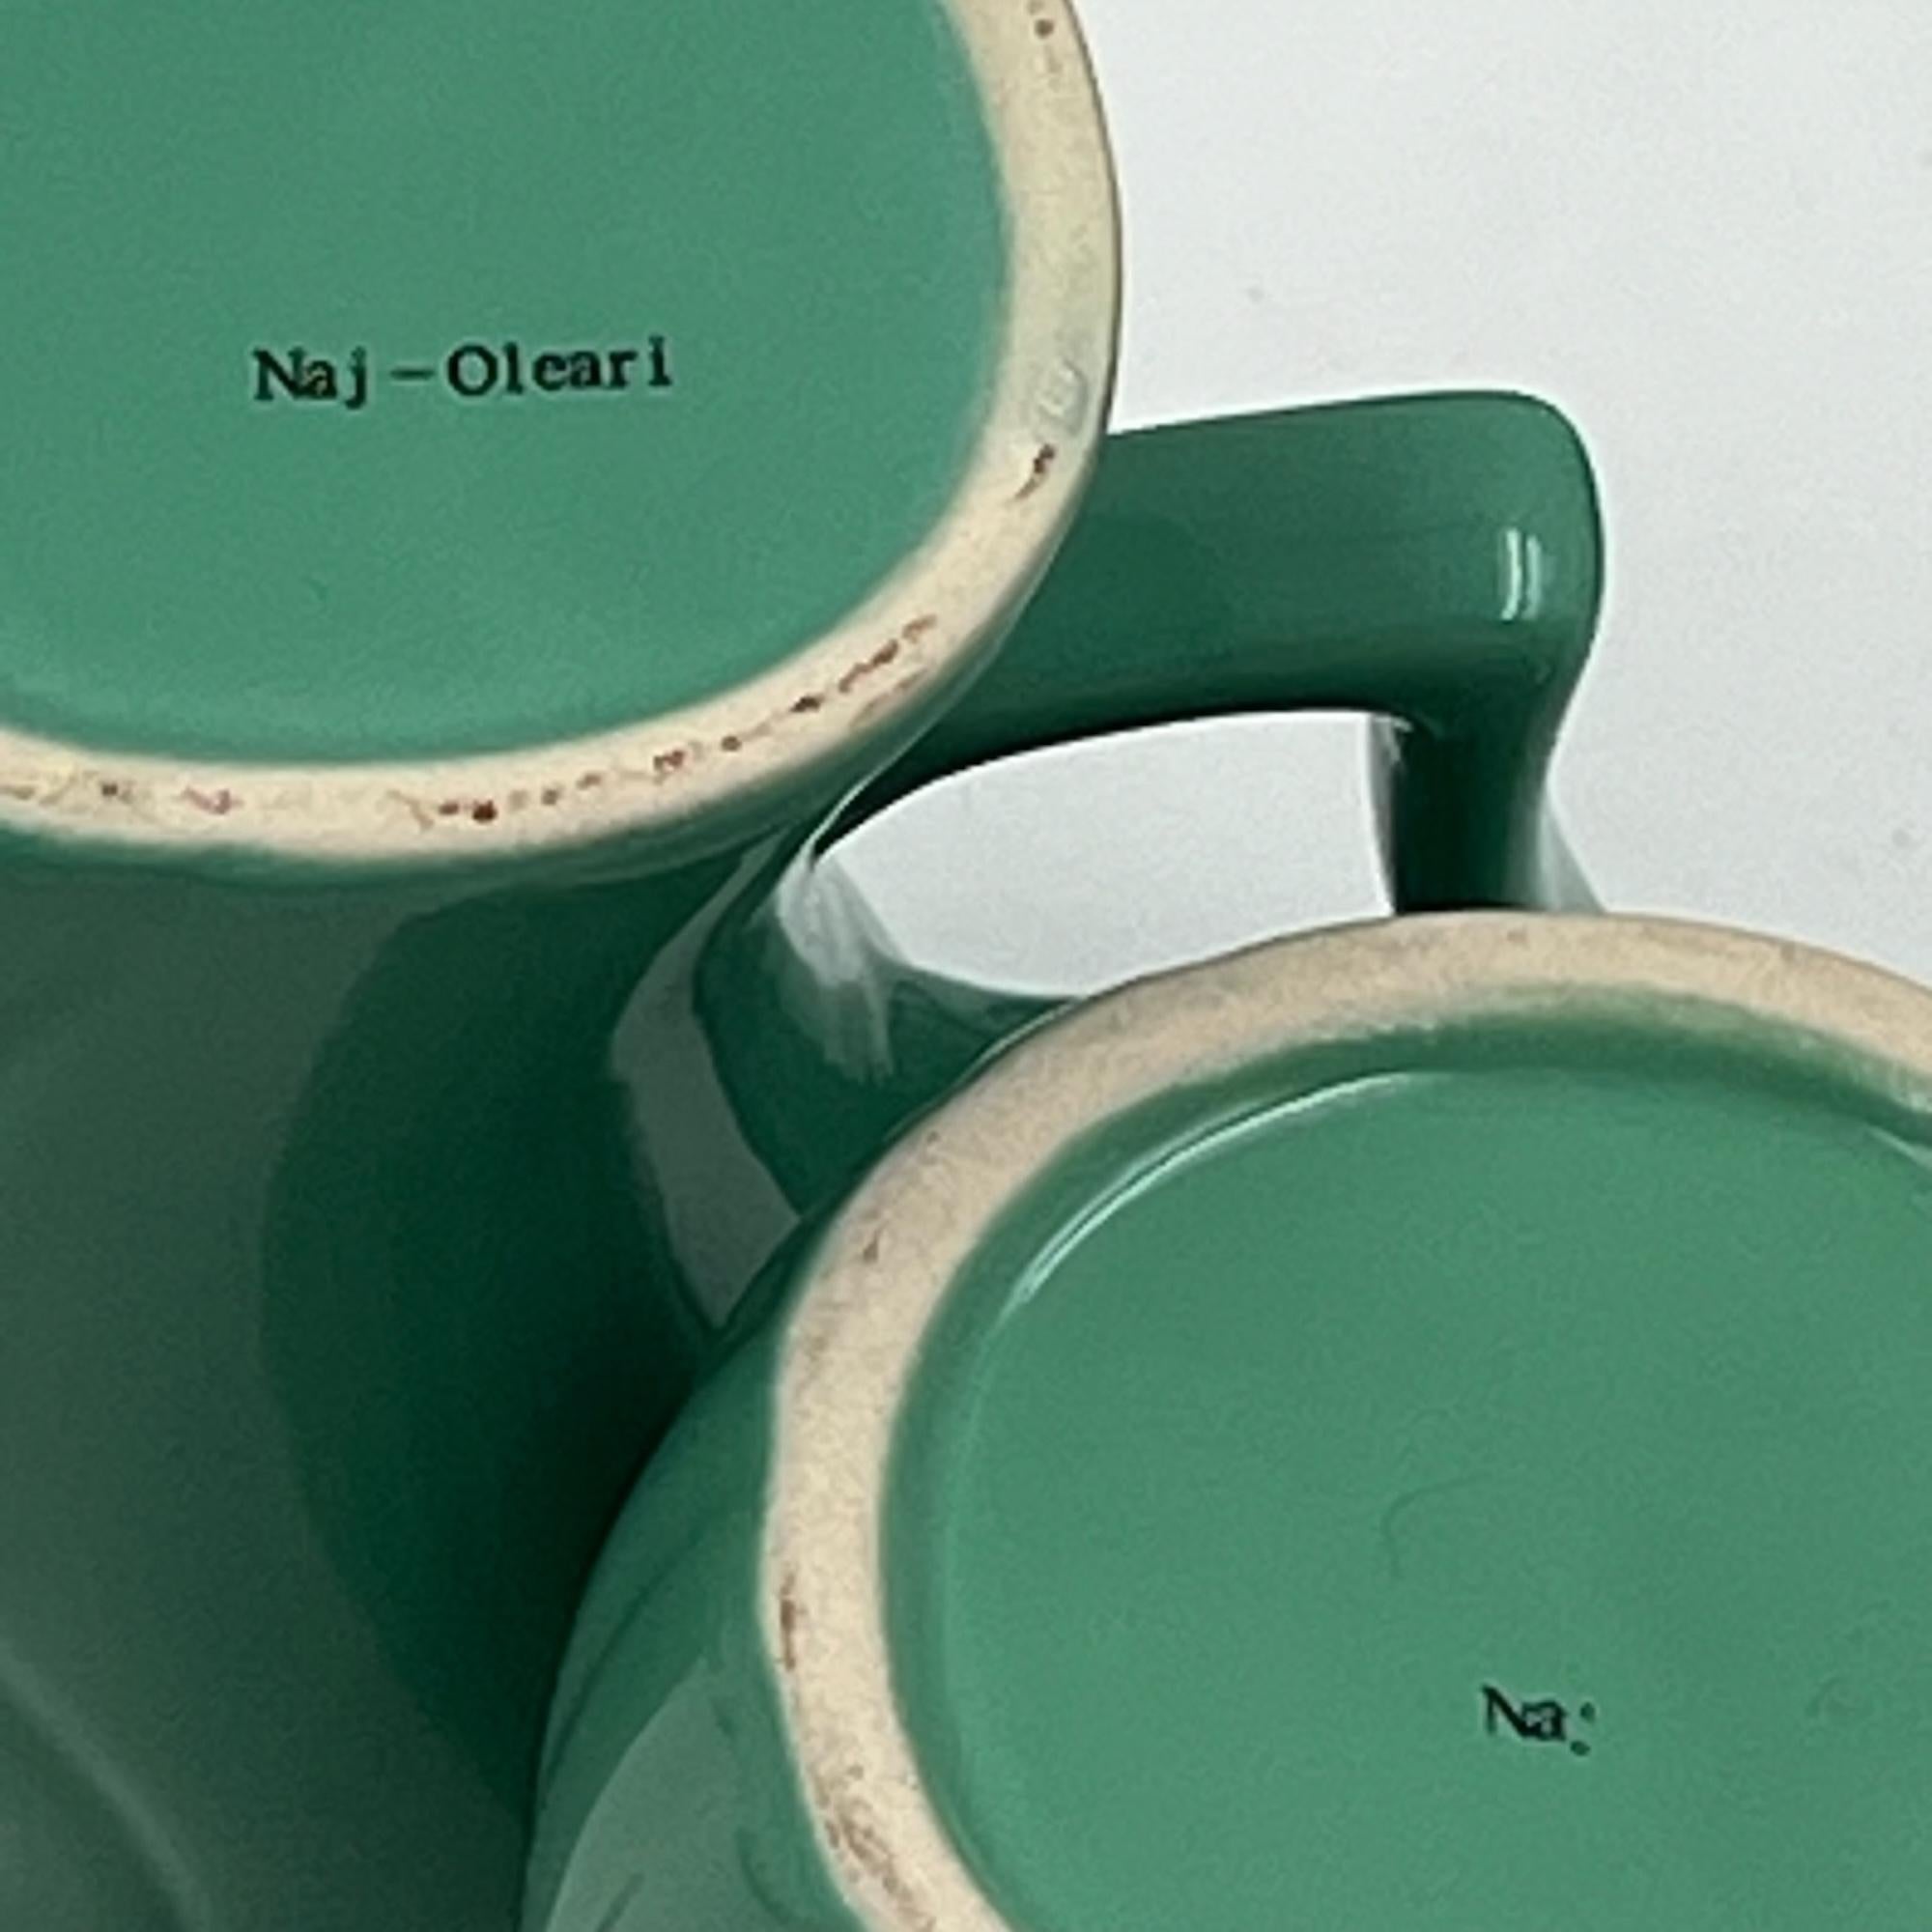 Vintage Memphis Naj Oleari Ceramic Tea Set by Massimo Iosa Ghini - 1980s For Sale 4